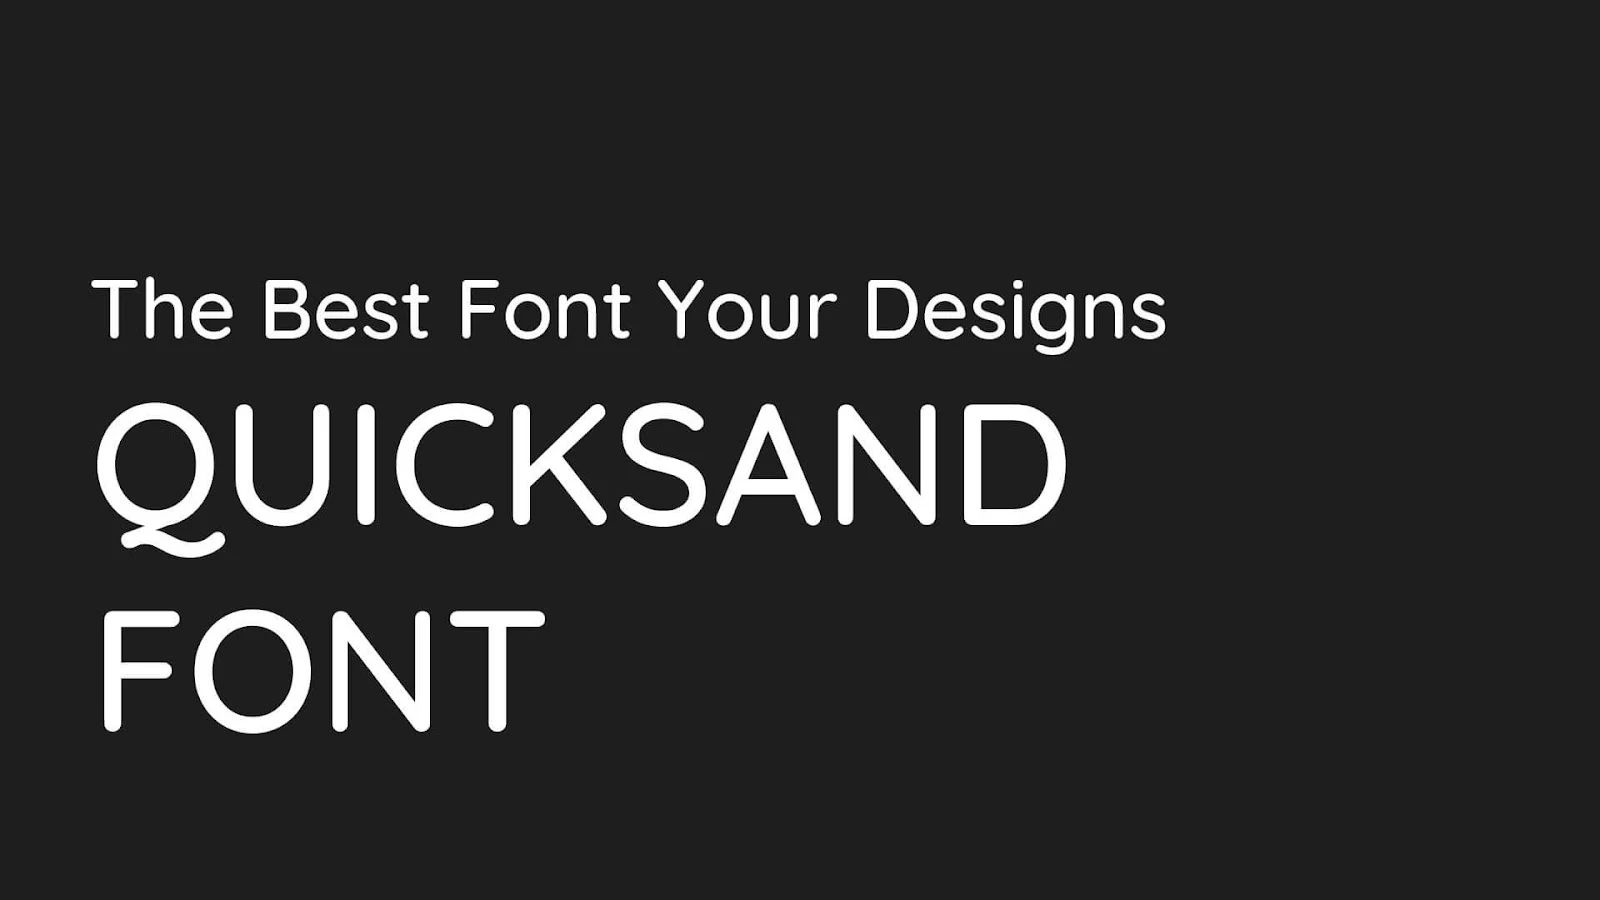 QuickSand Fonts